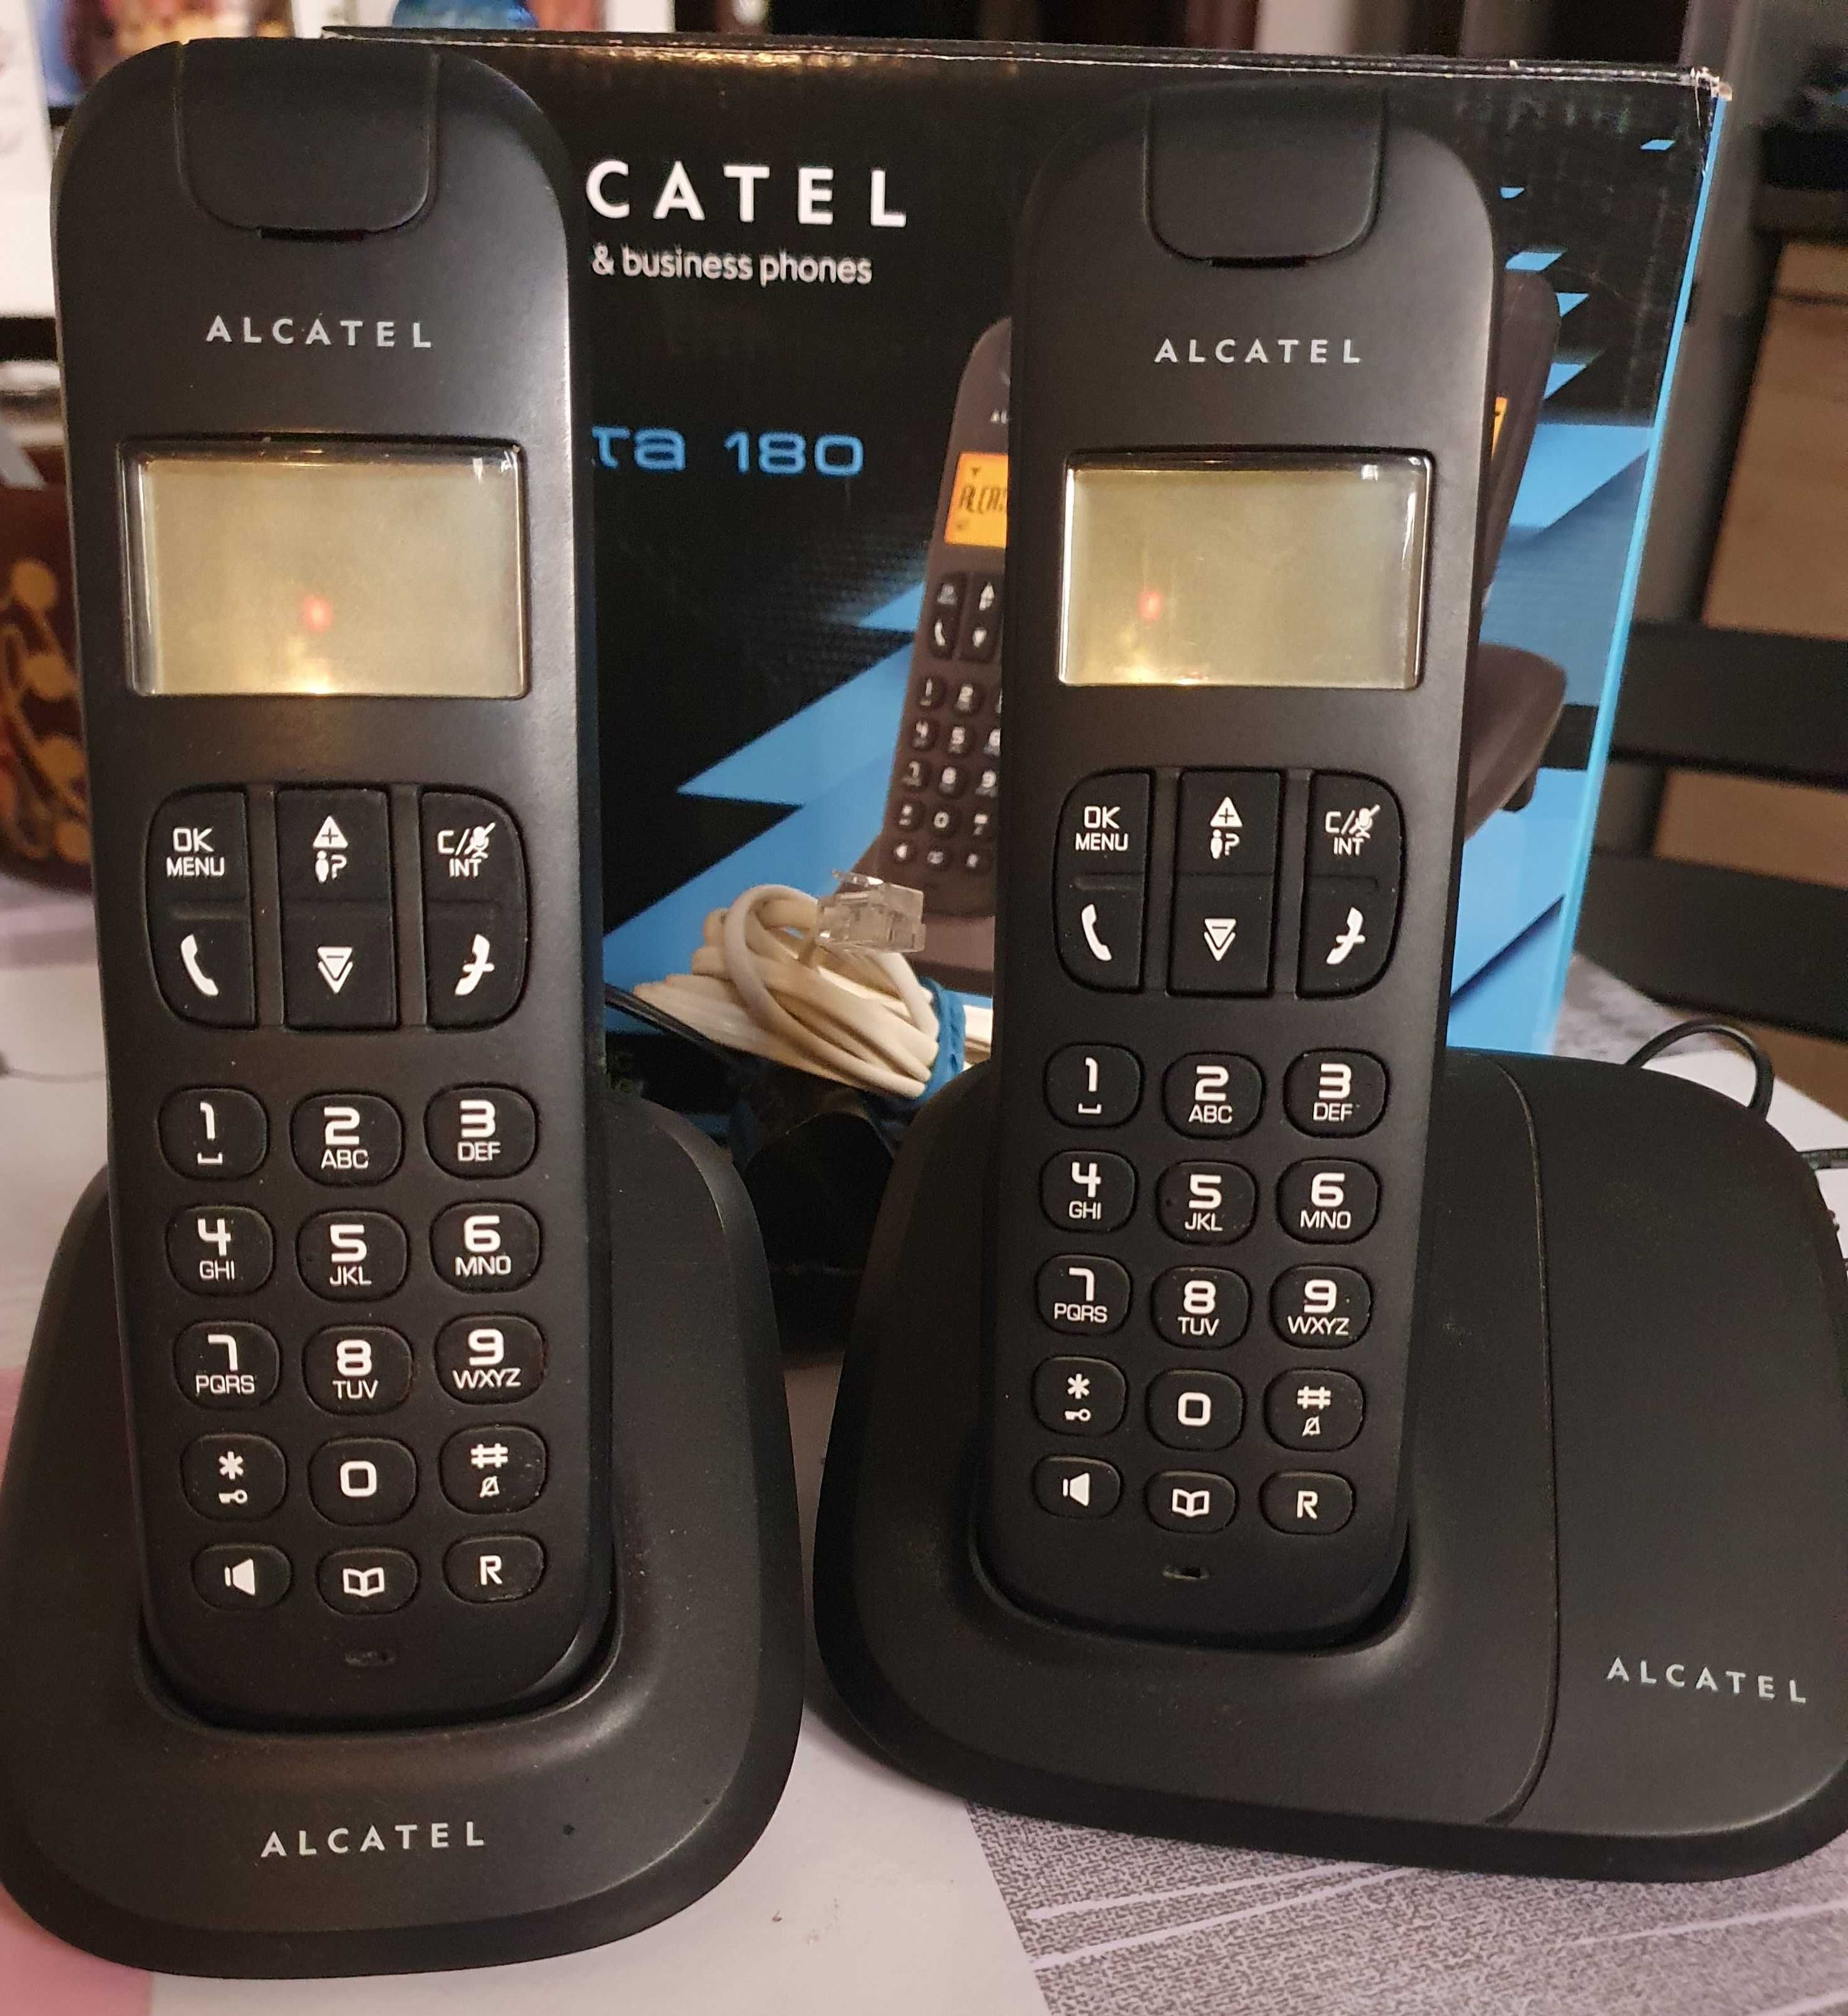 Telefon fara fir Alcatel Delta 180 duo